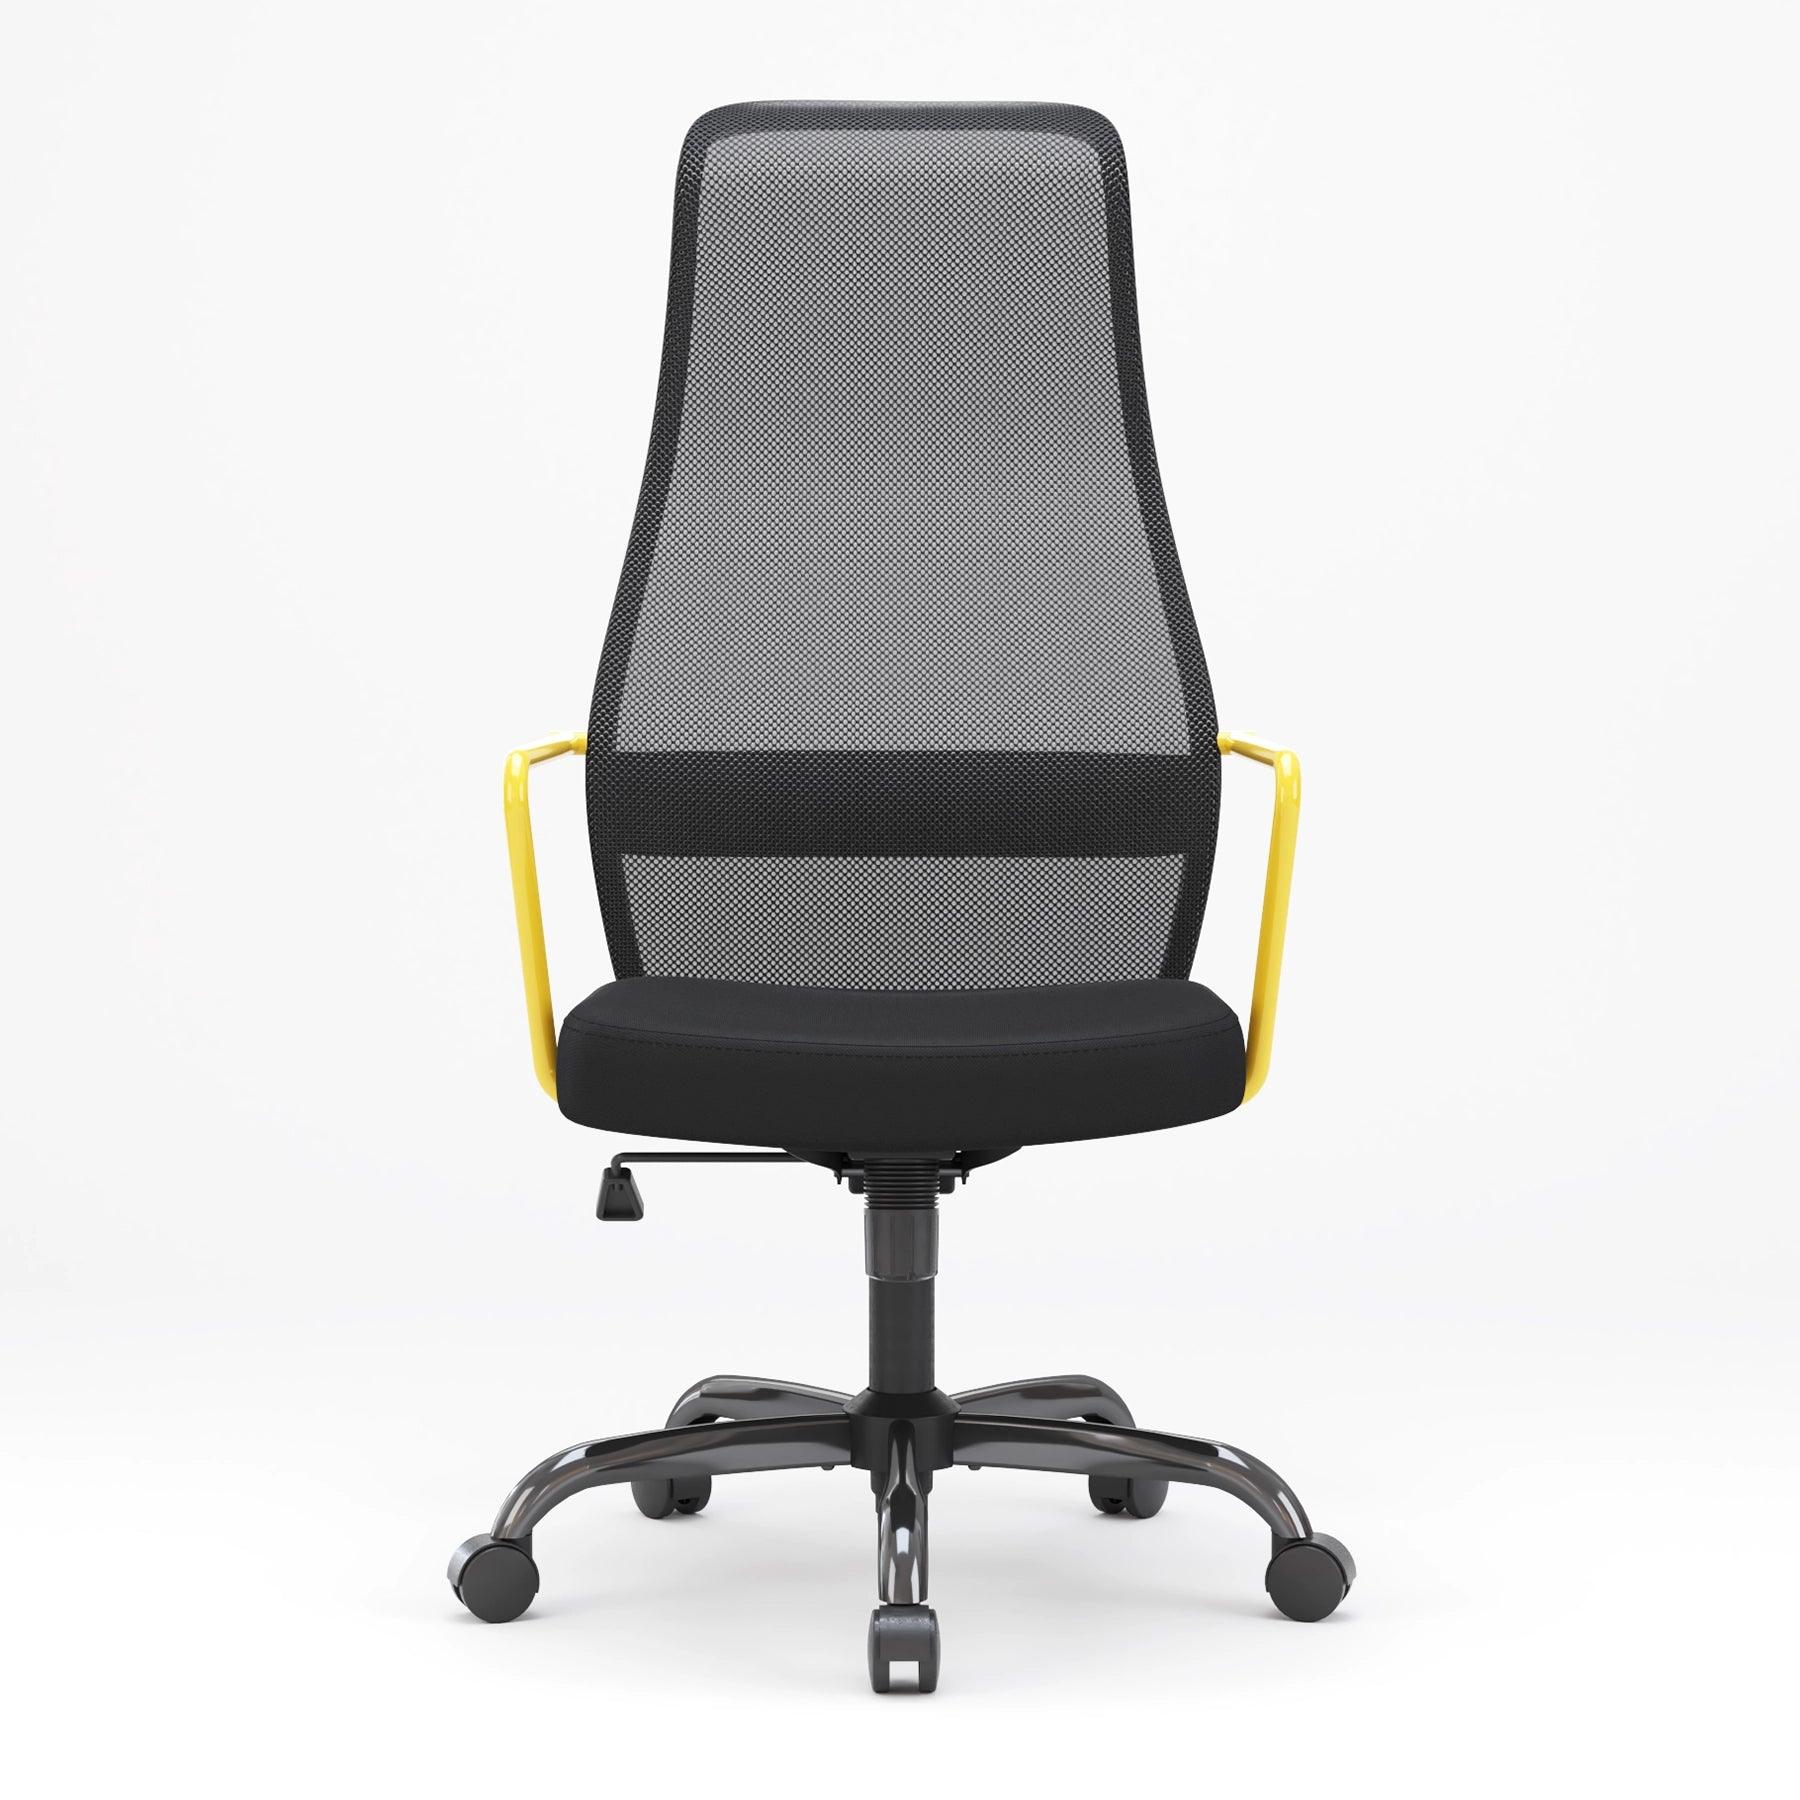 Office Chair Headrest Breathable Comfortable Ergonomic Attachment Universal